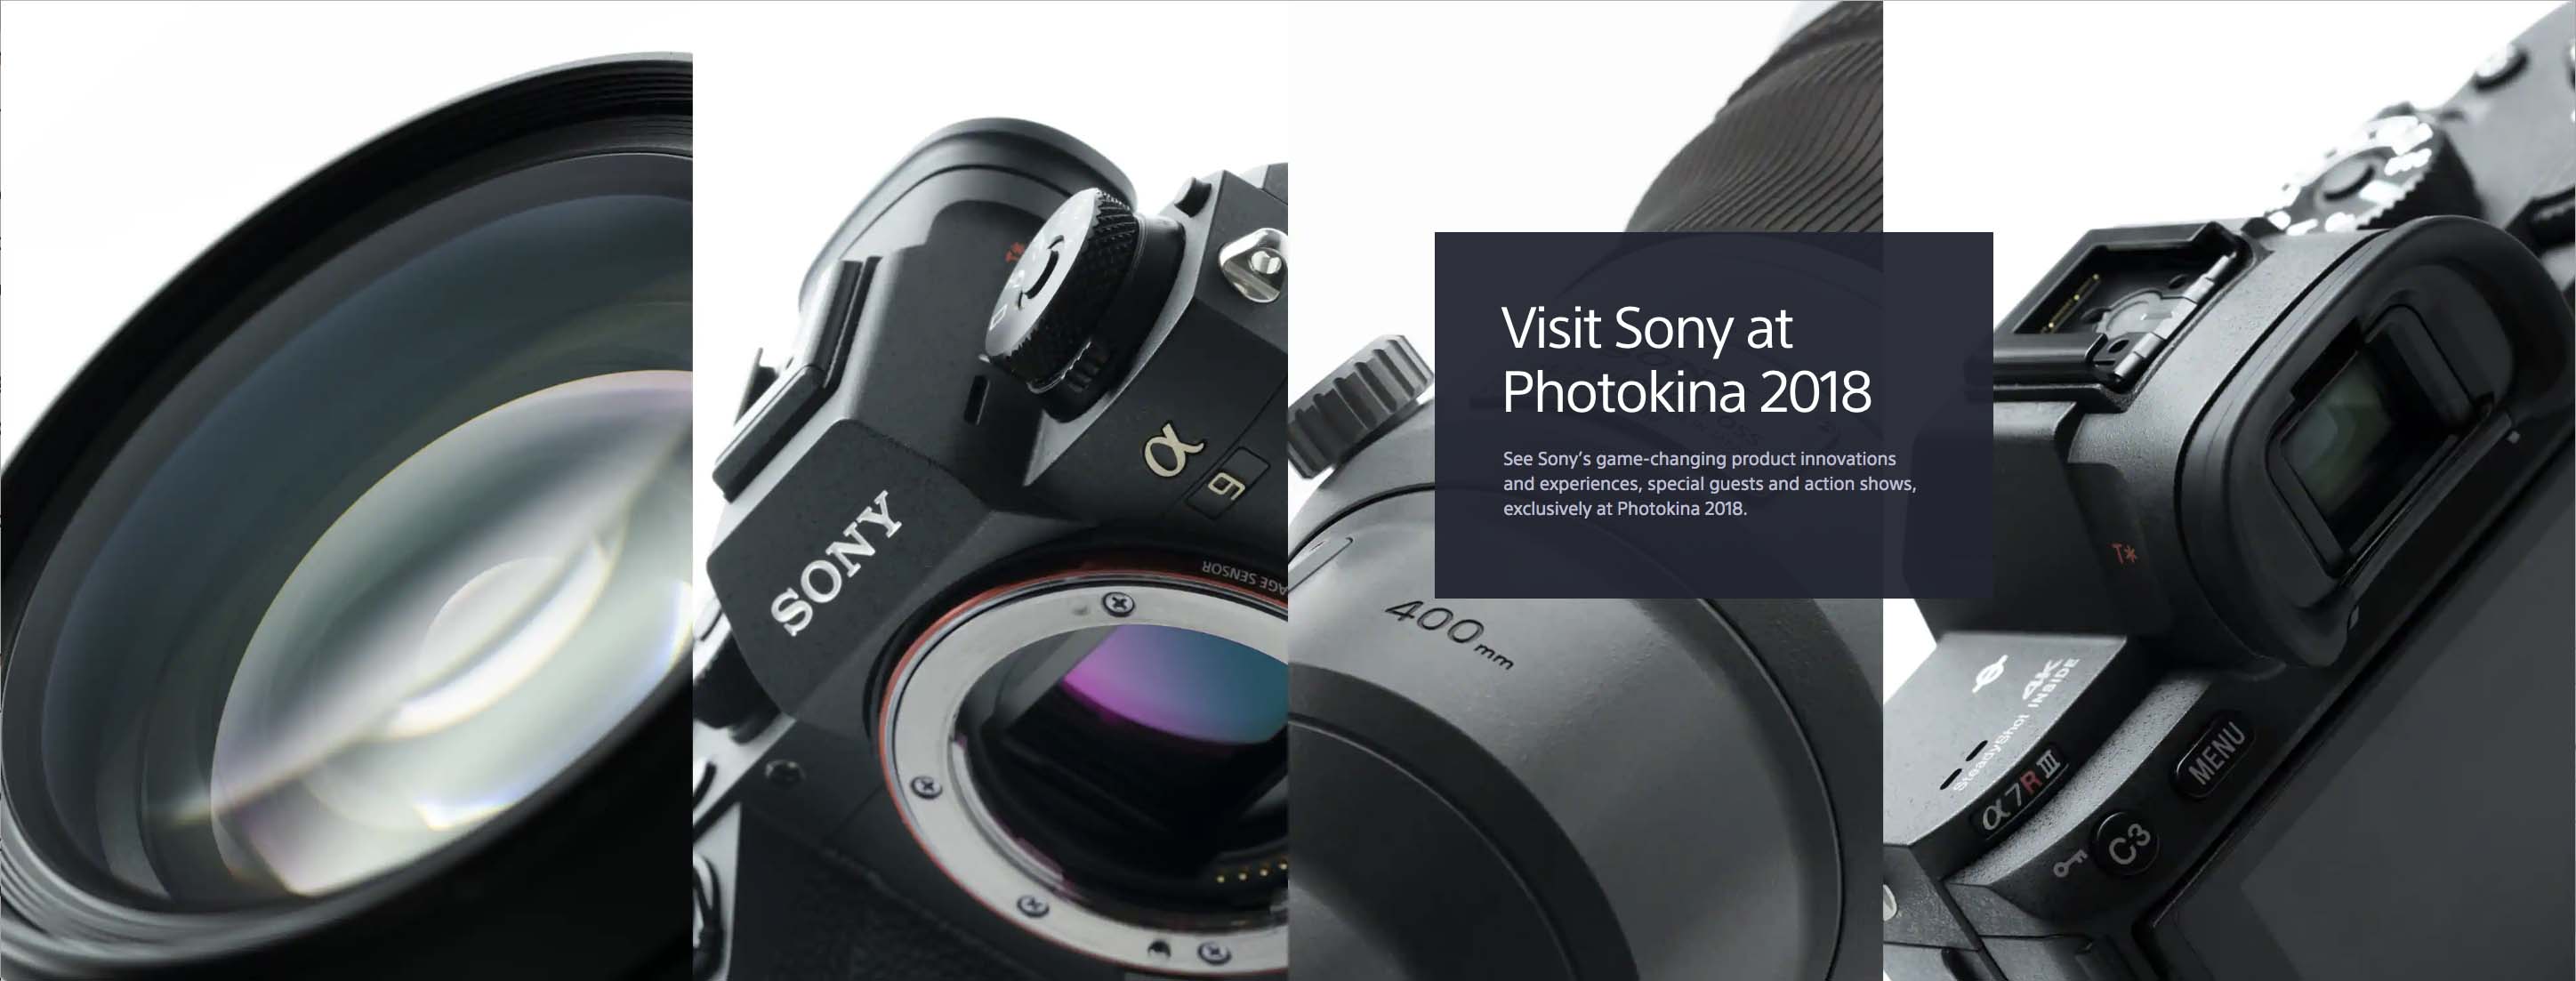 Sony Photokina 2018 Site Launched - Sony Addict